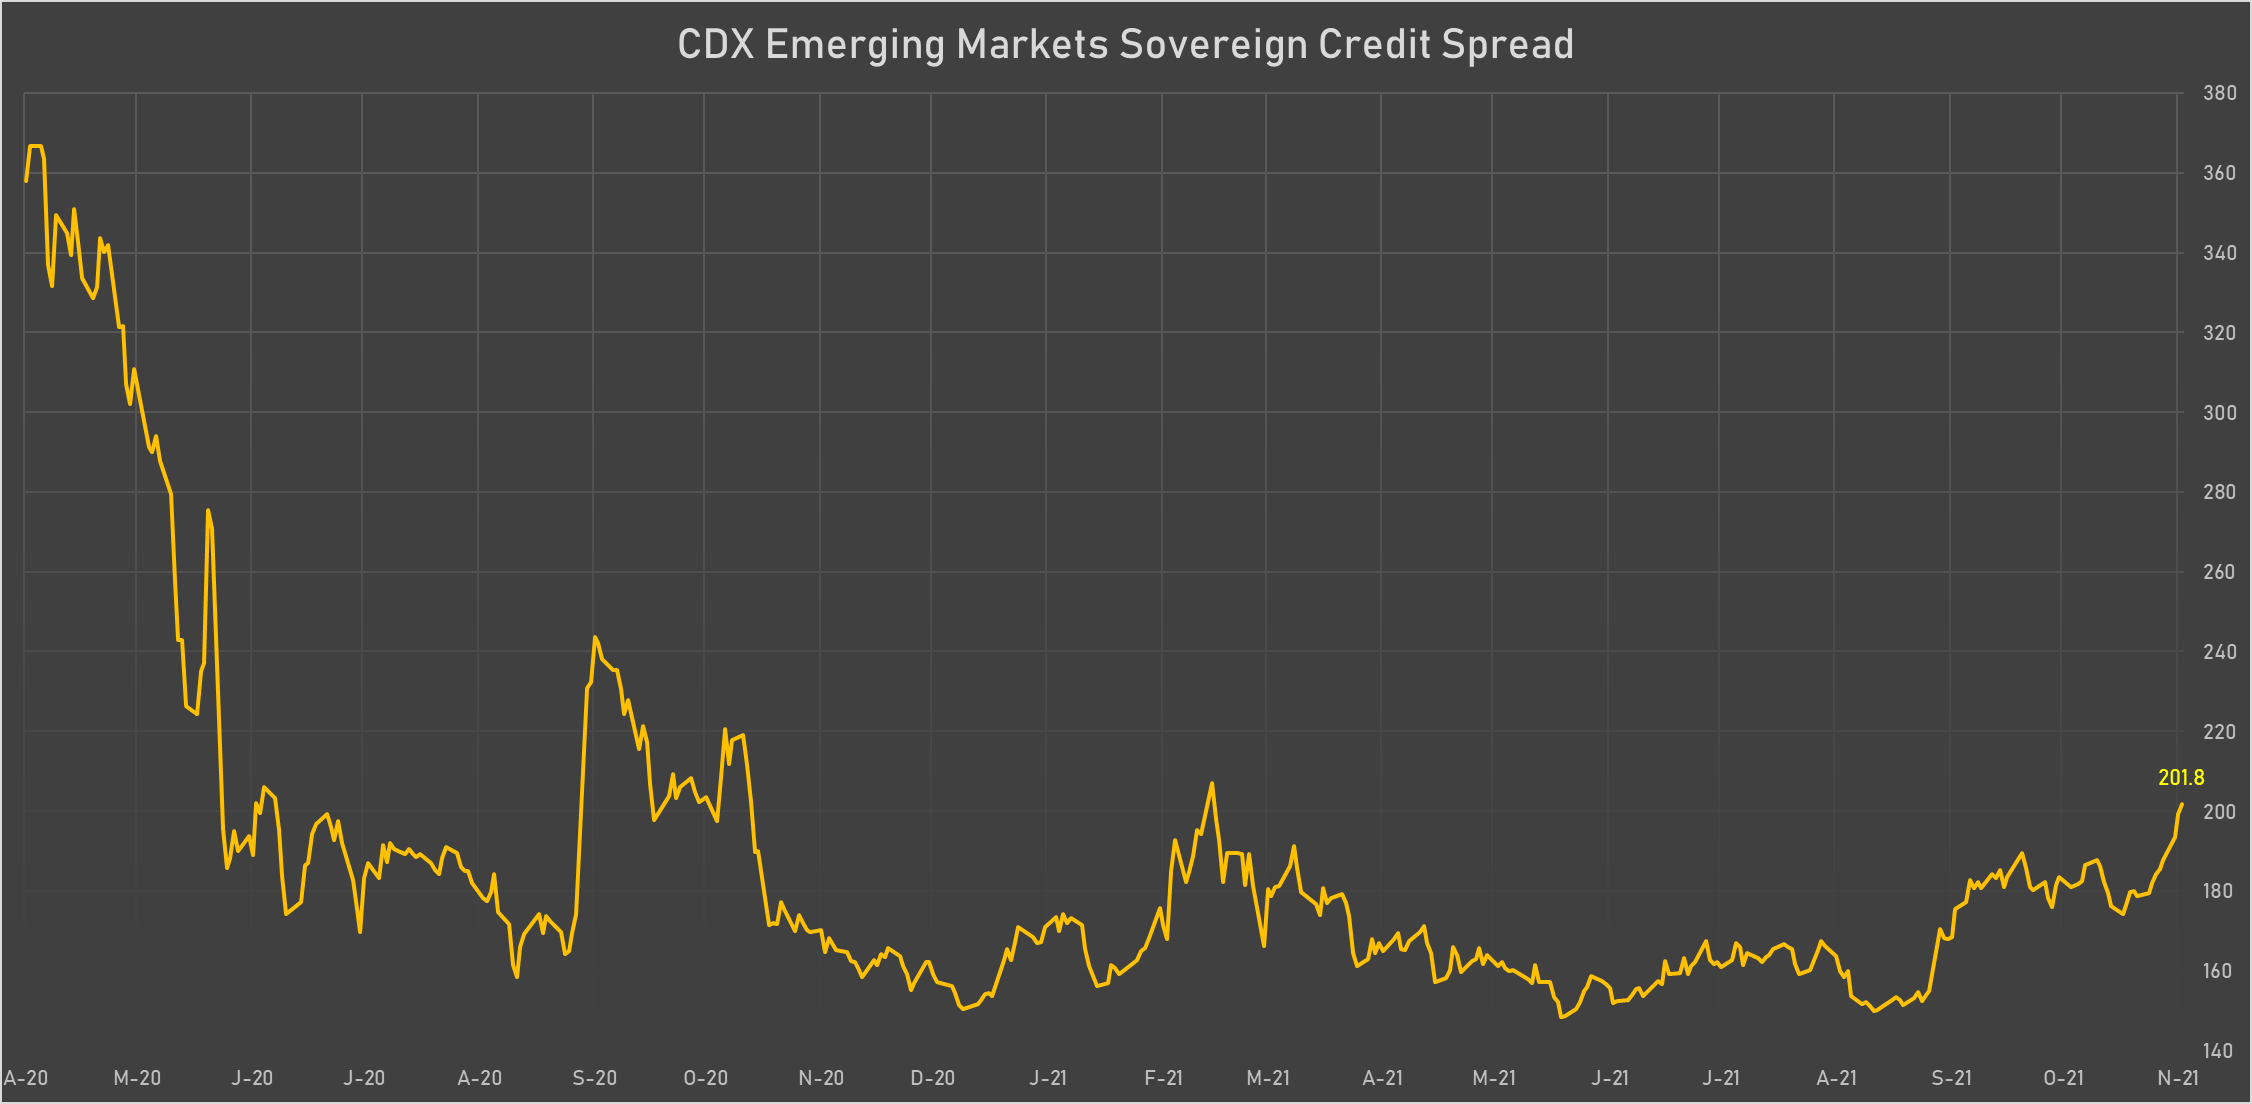 CDX EM Sovereign Credit Spread | Sources: phipost.com, Refinitiv data